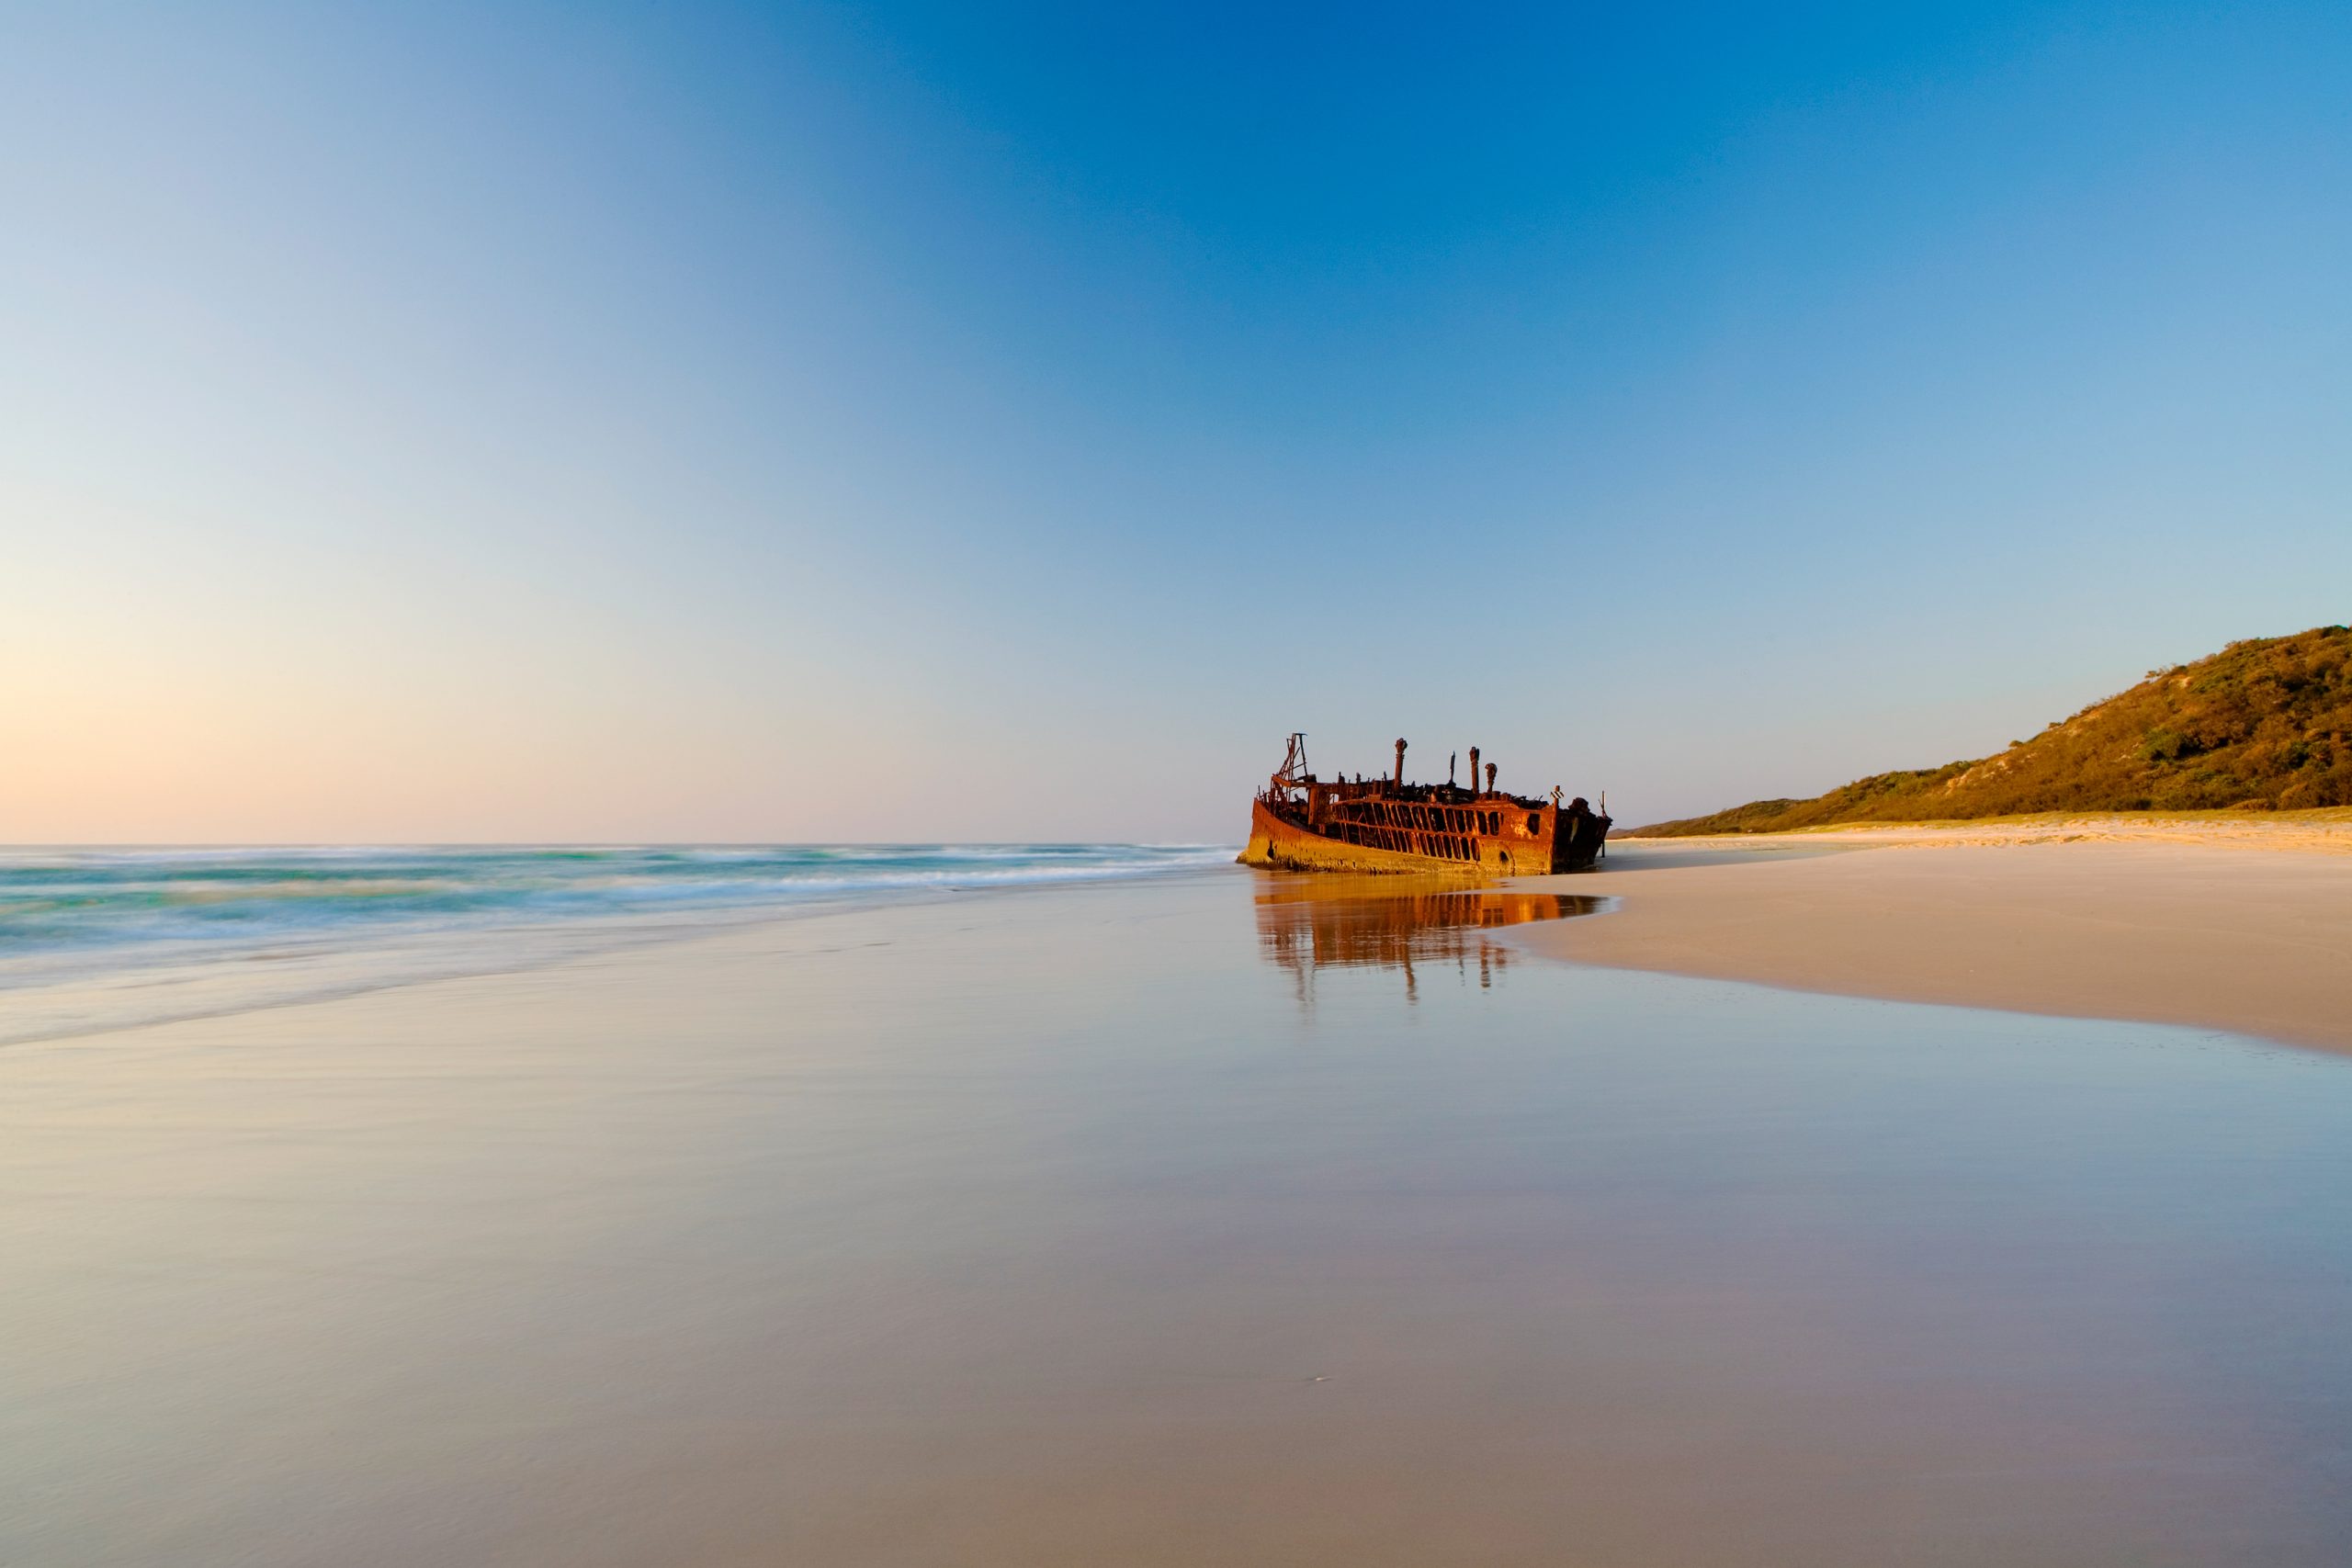 The S.S. Maheno a shipwreck that sits ashore K'Gari, Fraser Island in Queensland Australia